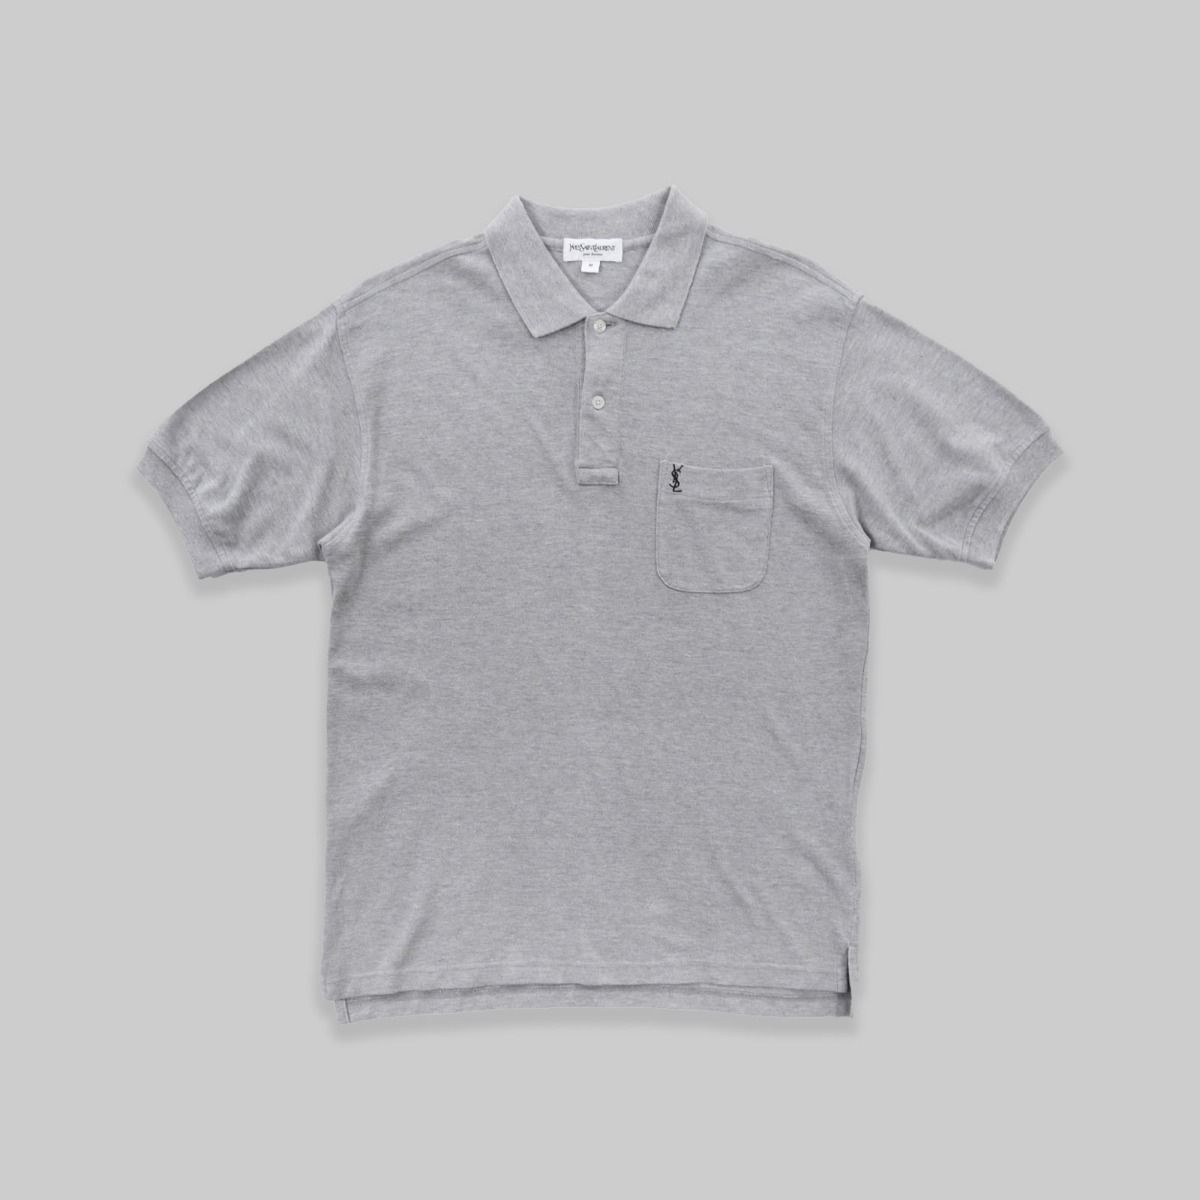 Yves Saint Laurent 'YSL' Grey Polo Shirt